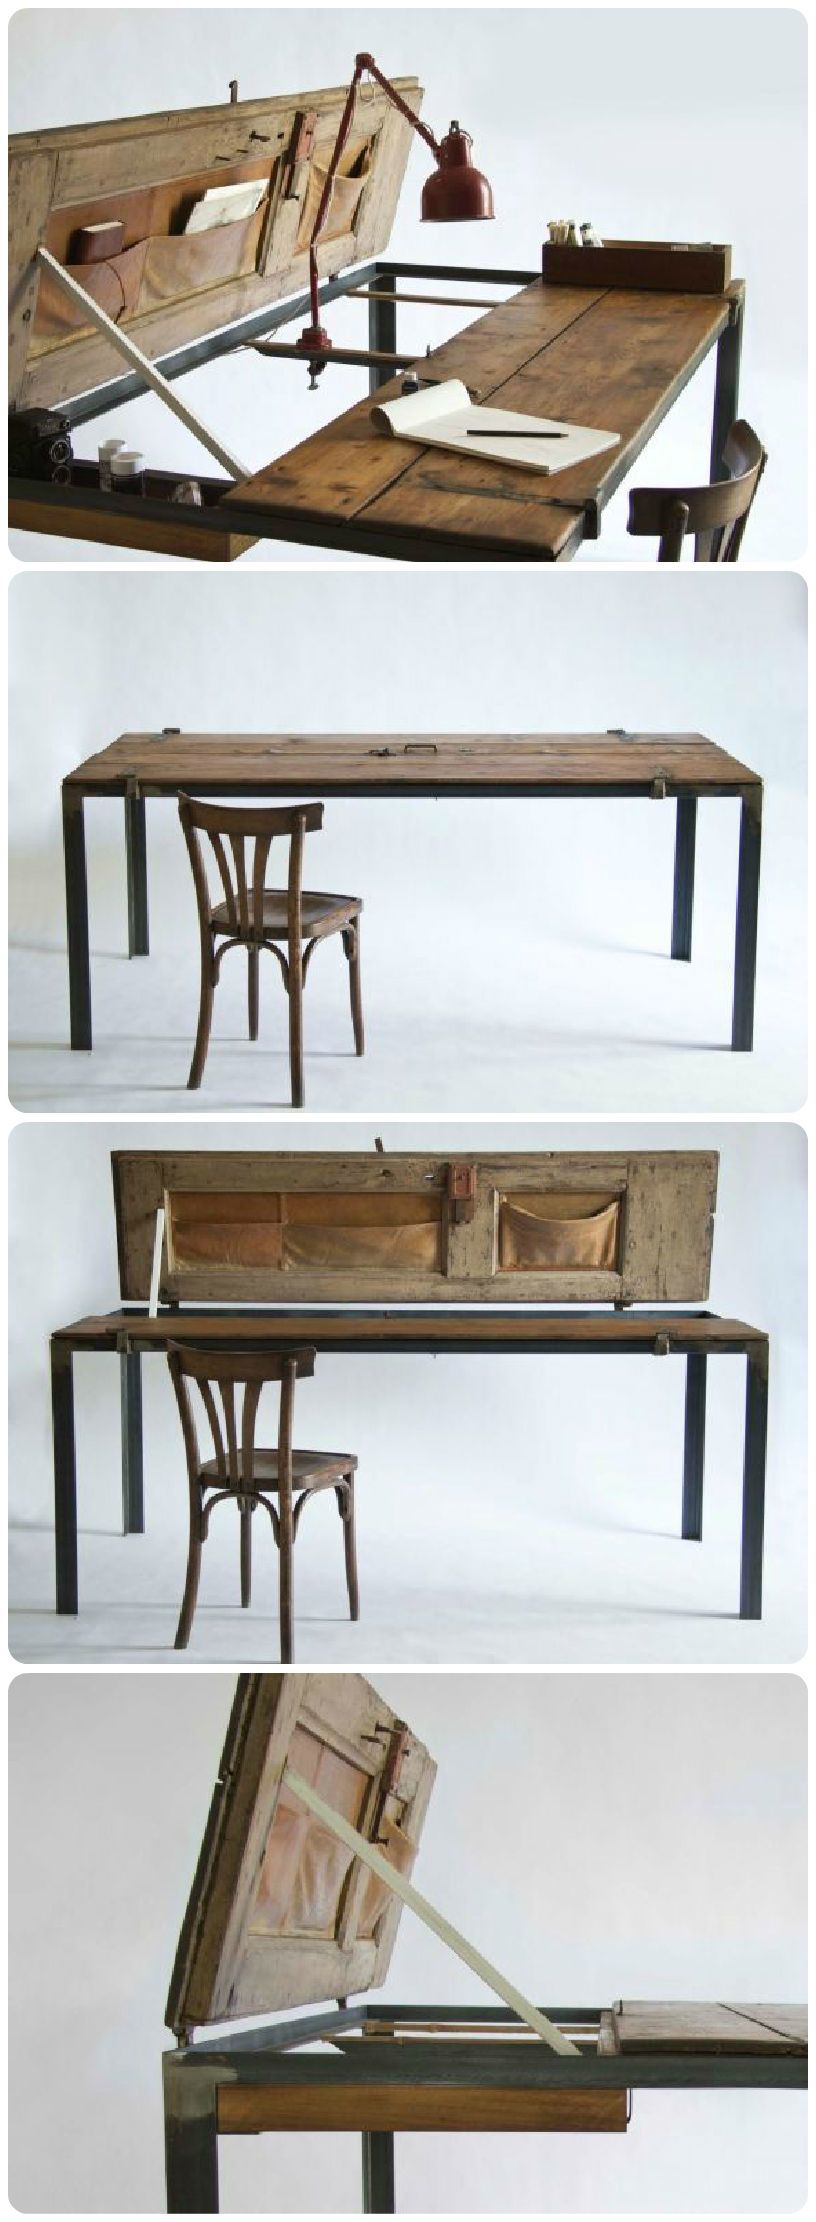 Reclaimed Wood Furniture by Manoteca